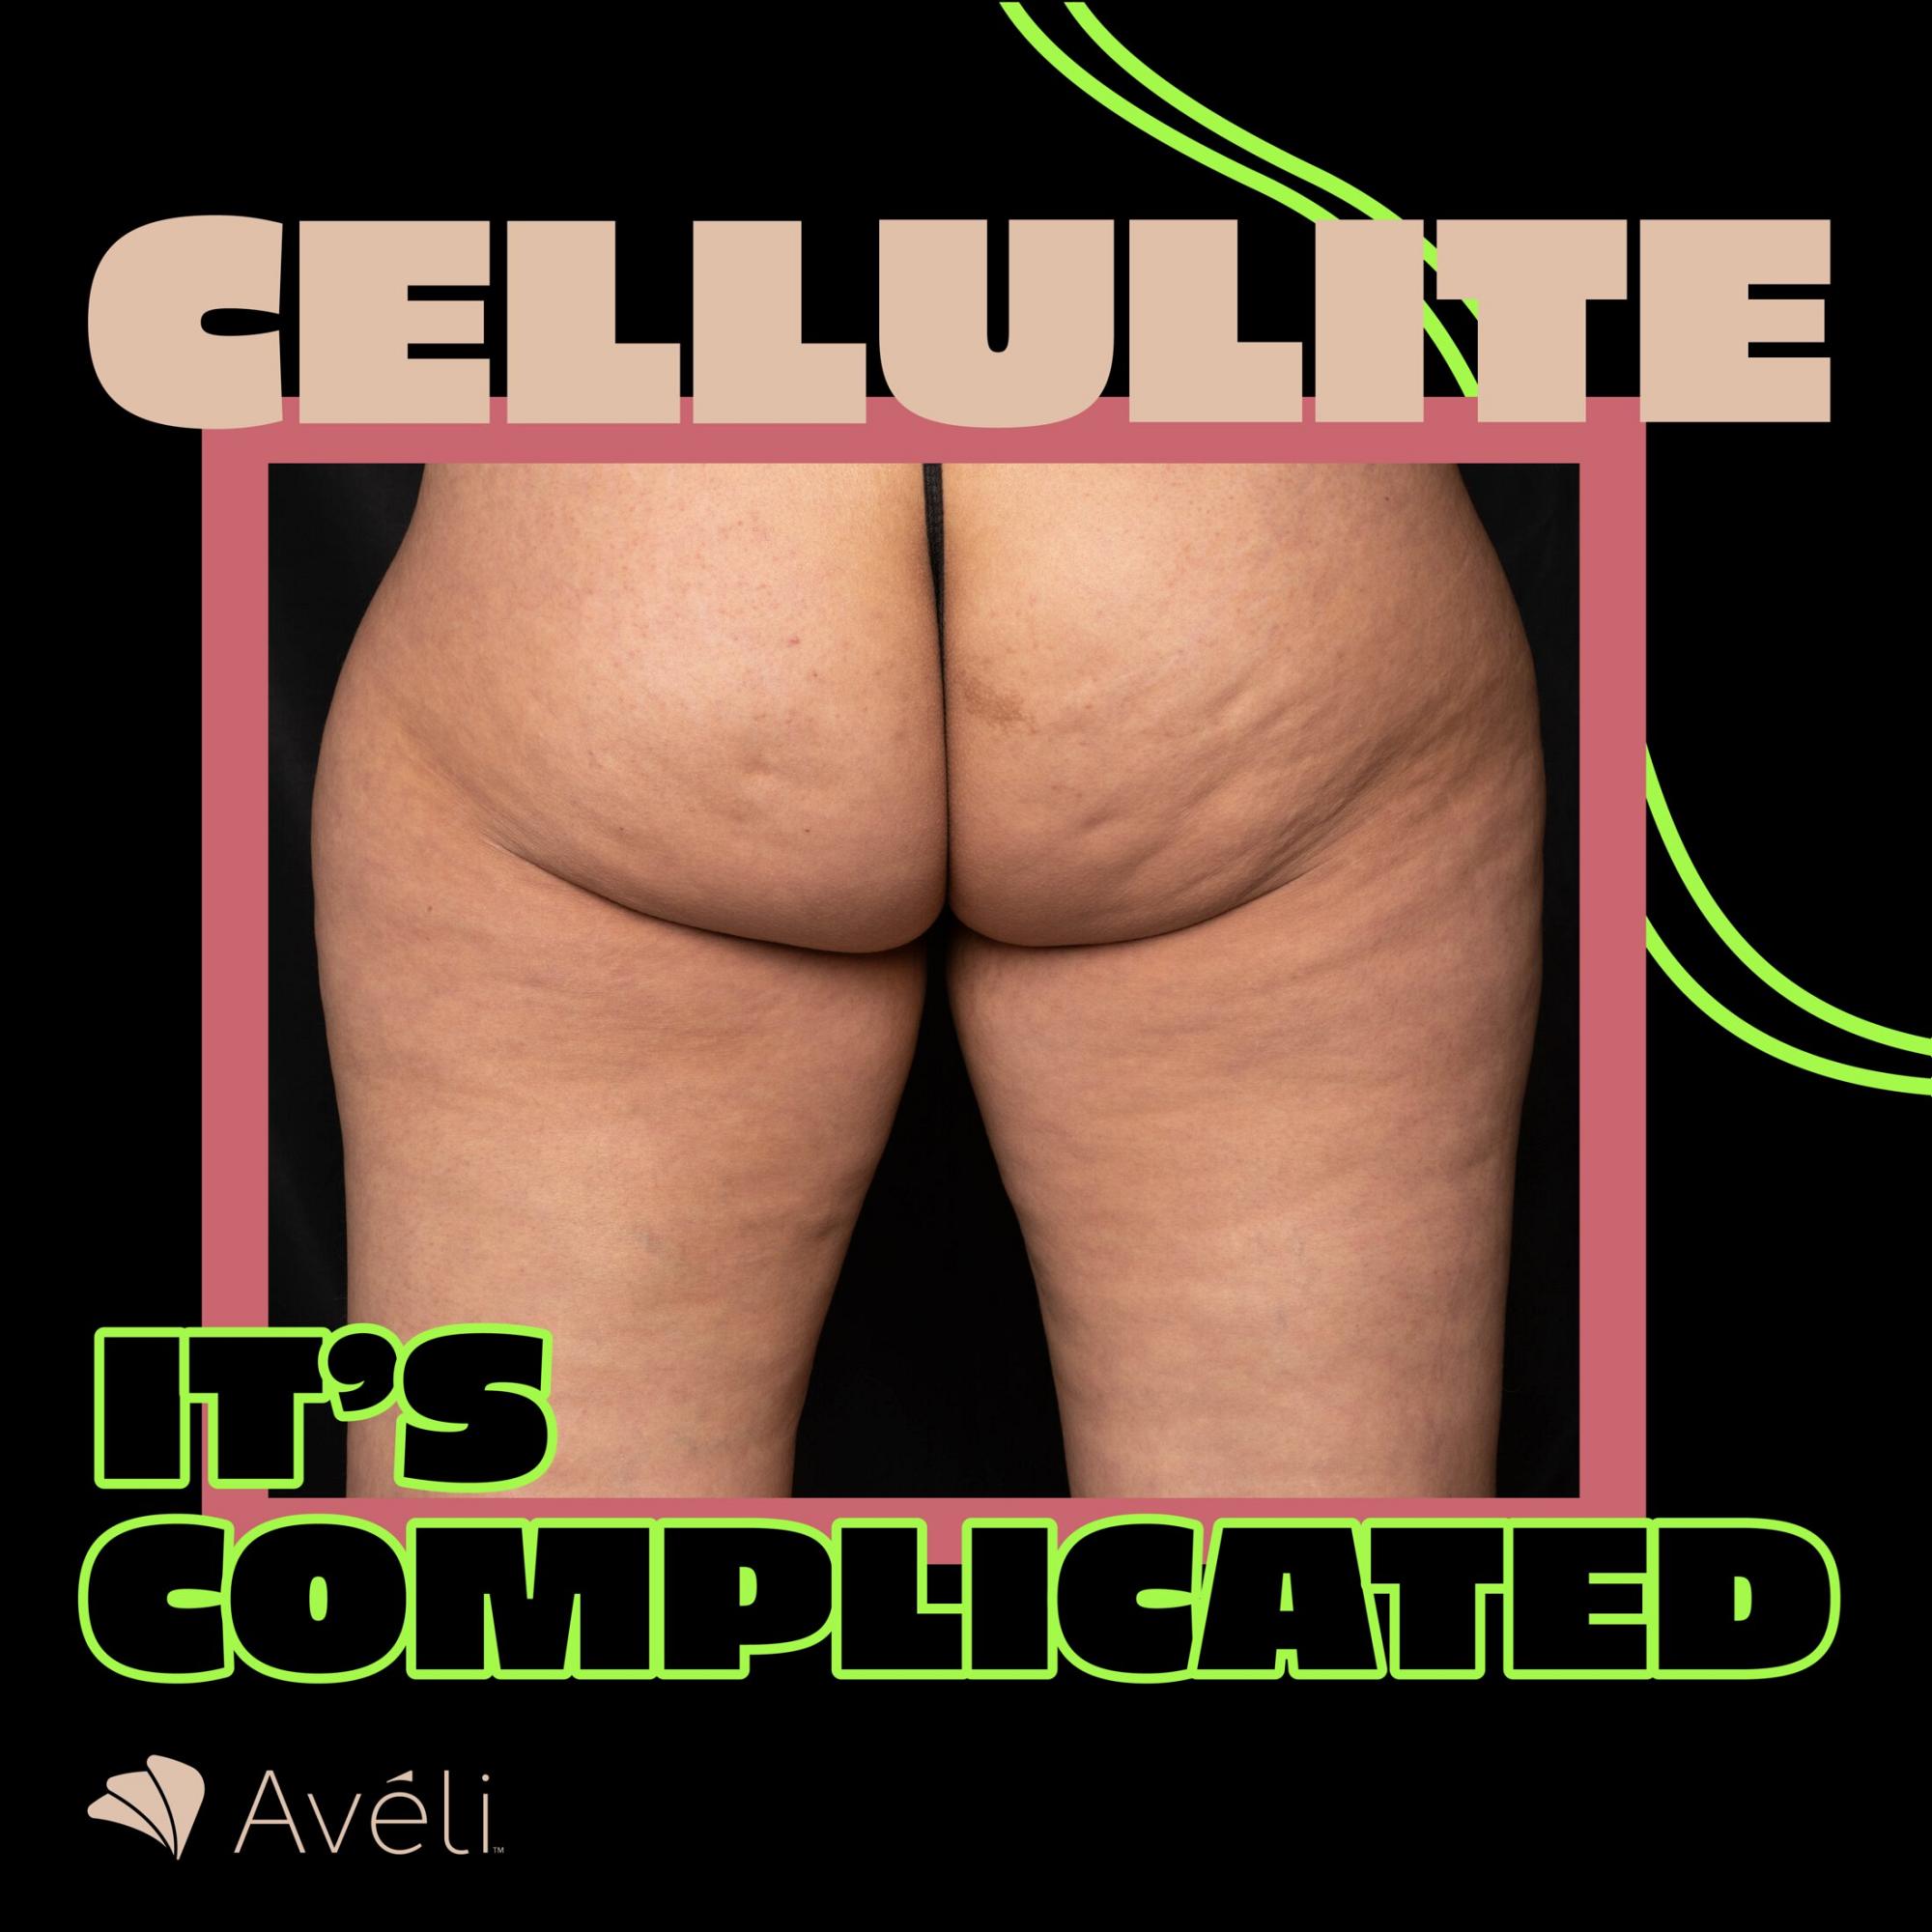 Aveli Cellulite infographic